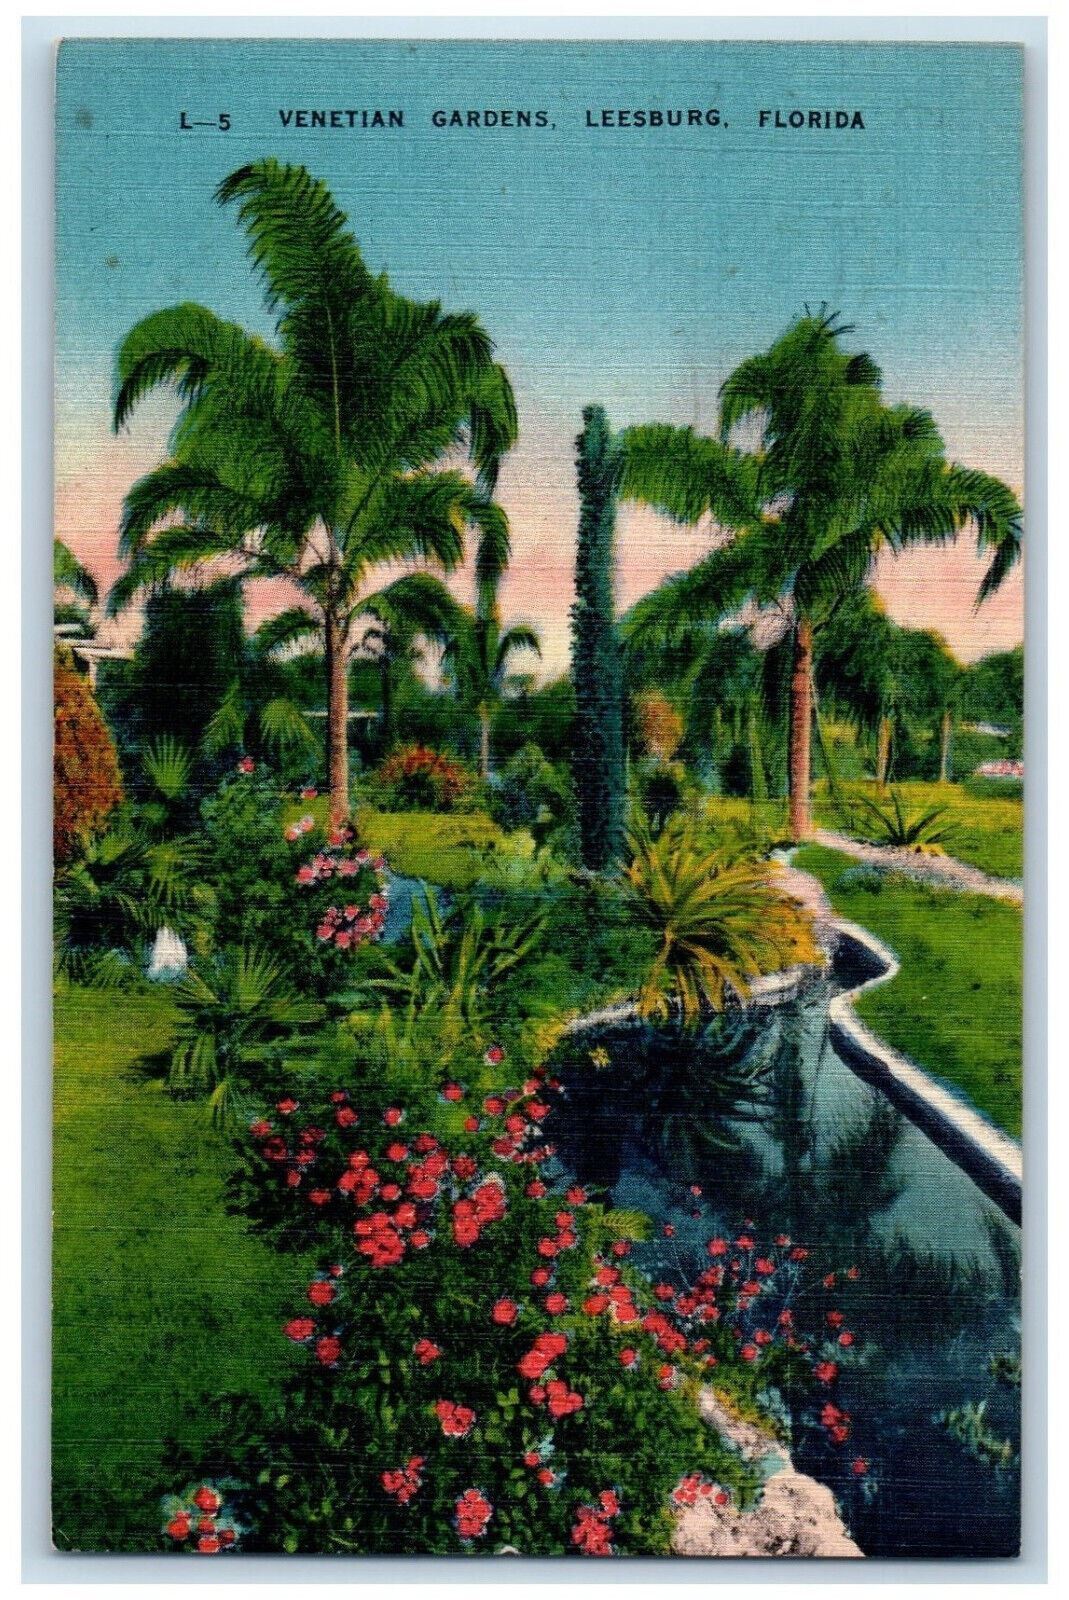 1946 Venetian Gardens Leesburg Florida FL Vintage Posted Postcard